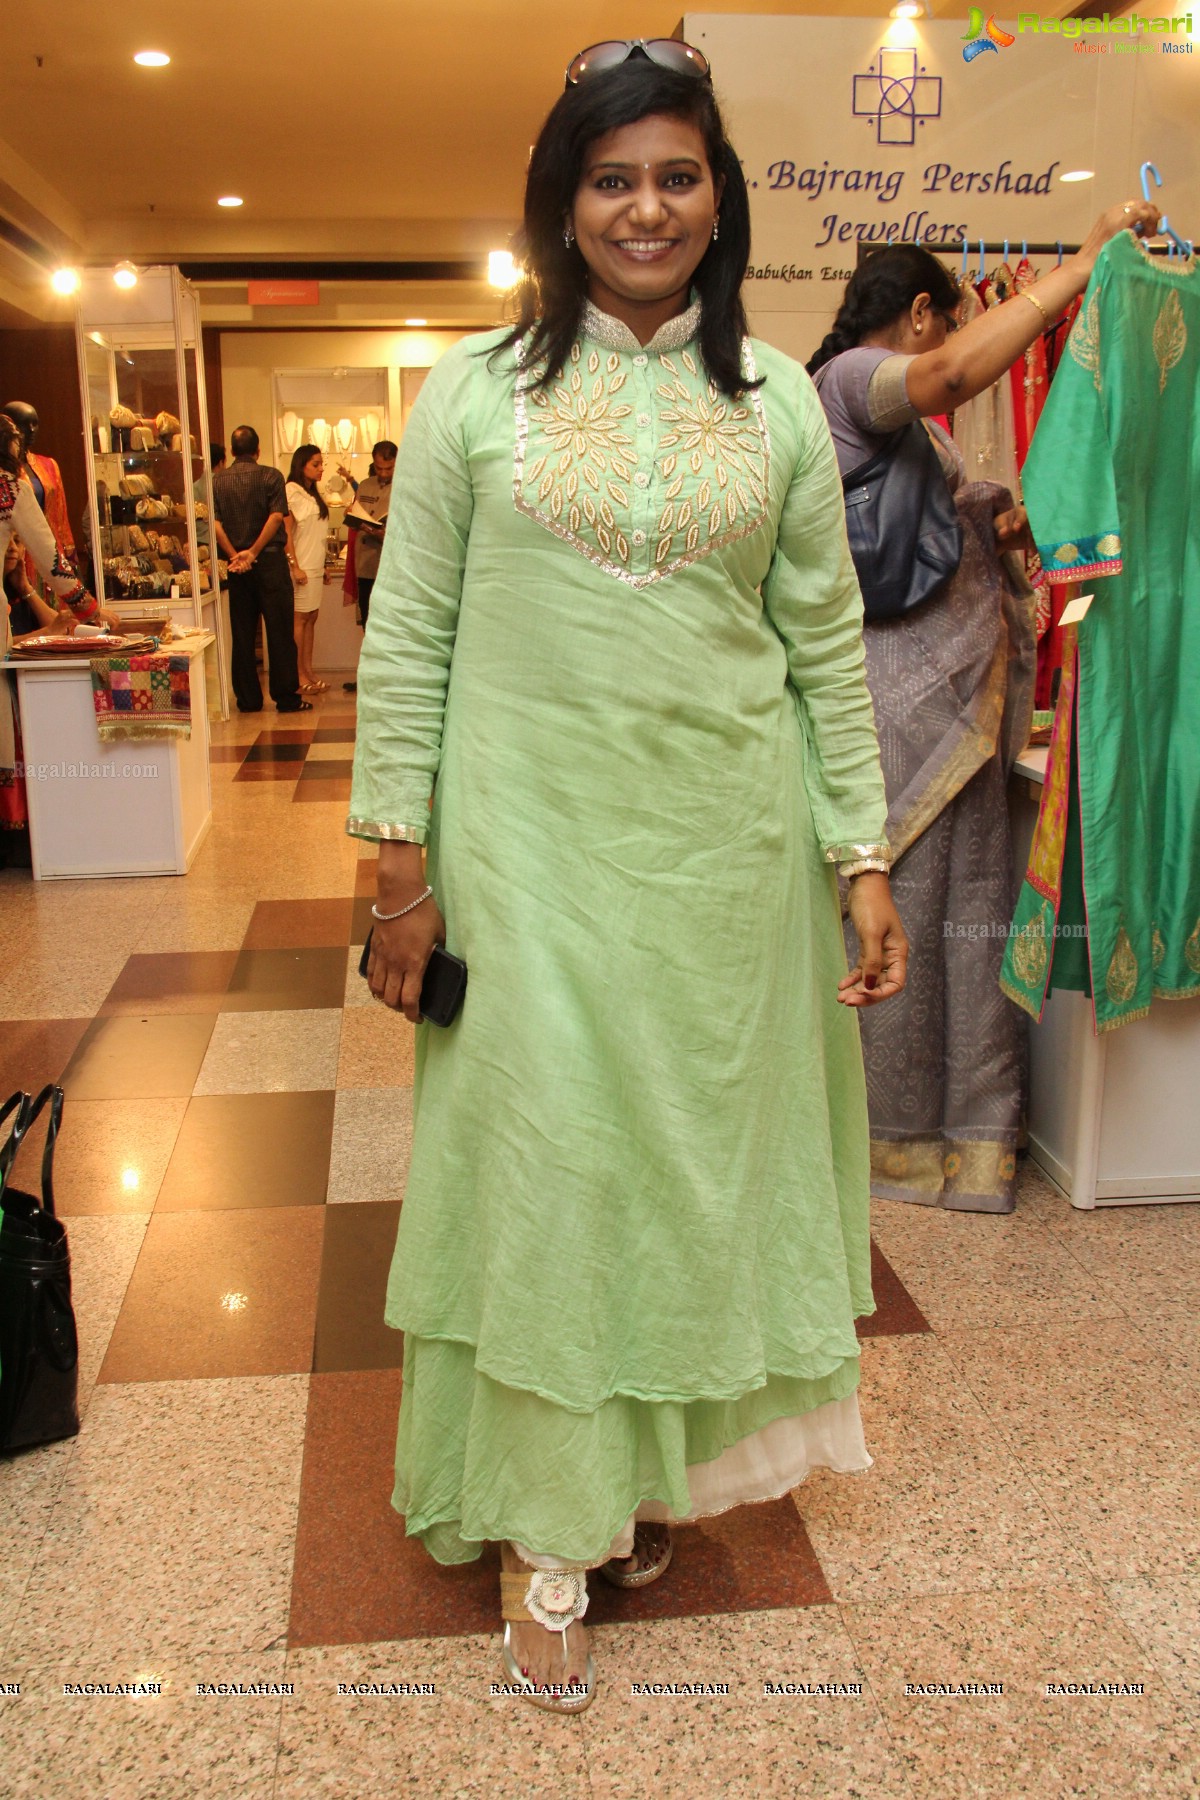 Araaish Hyderabad by Samia Alam & Swathi Kilaru (Aug. 2014)